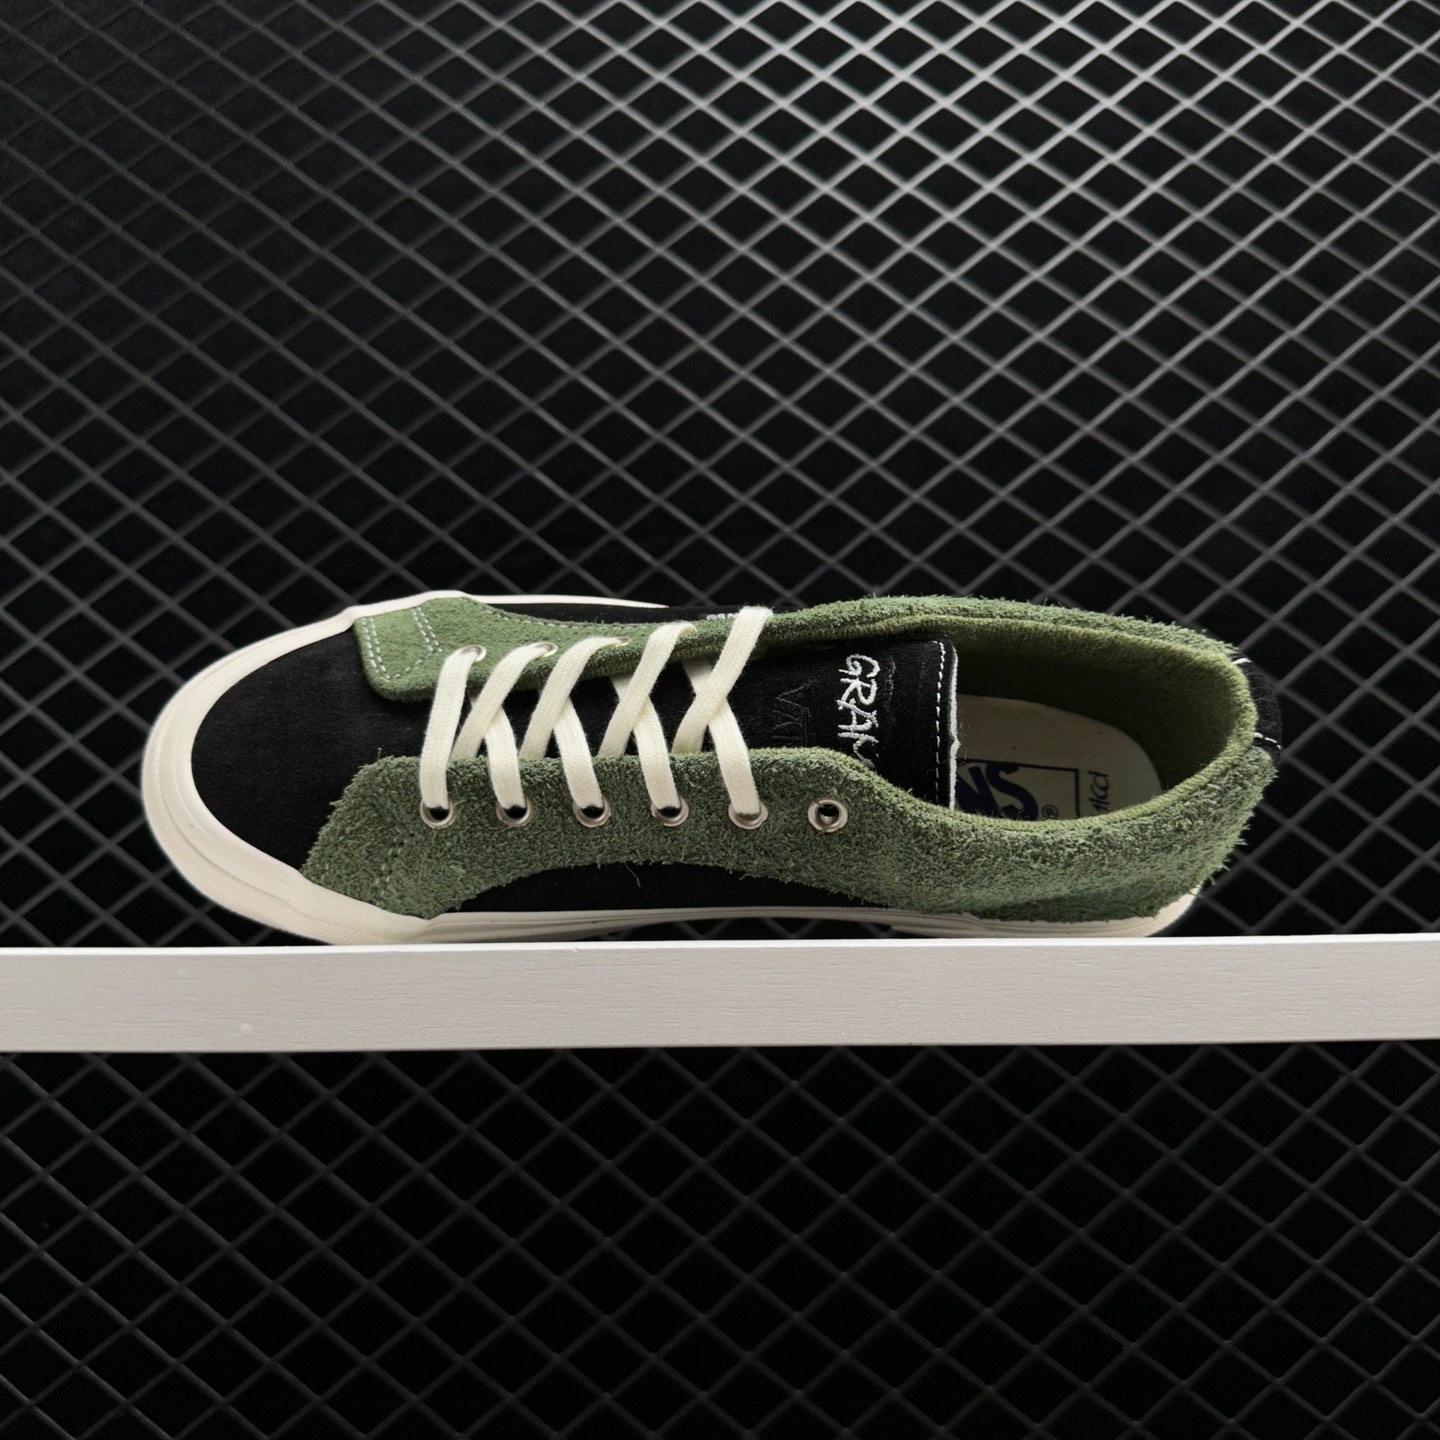 Vans Lampin 86 DX x Gramicci 'Green' - Get Stylish and Comfortable Footwear